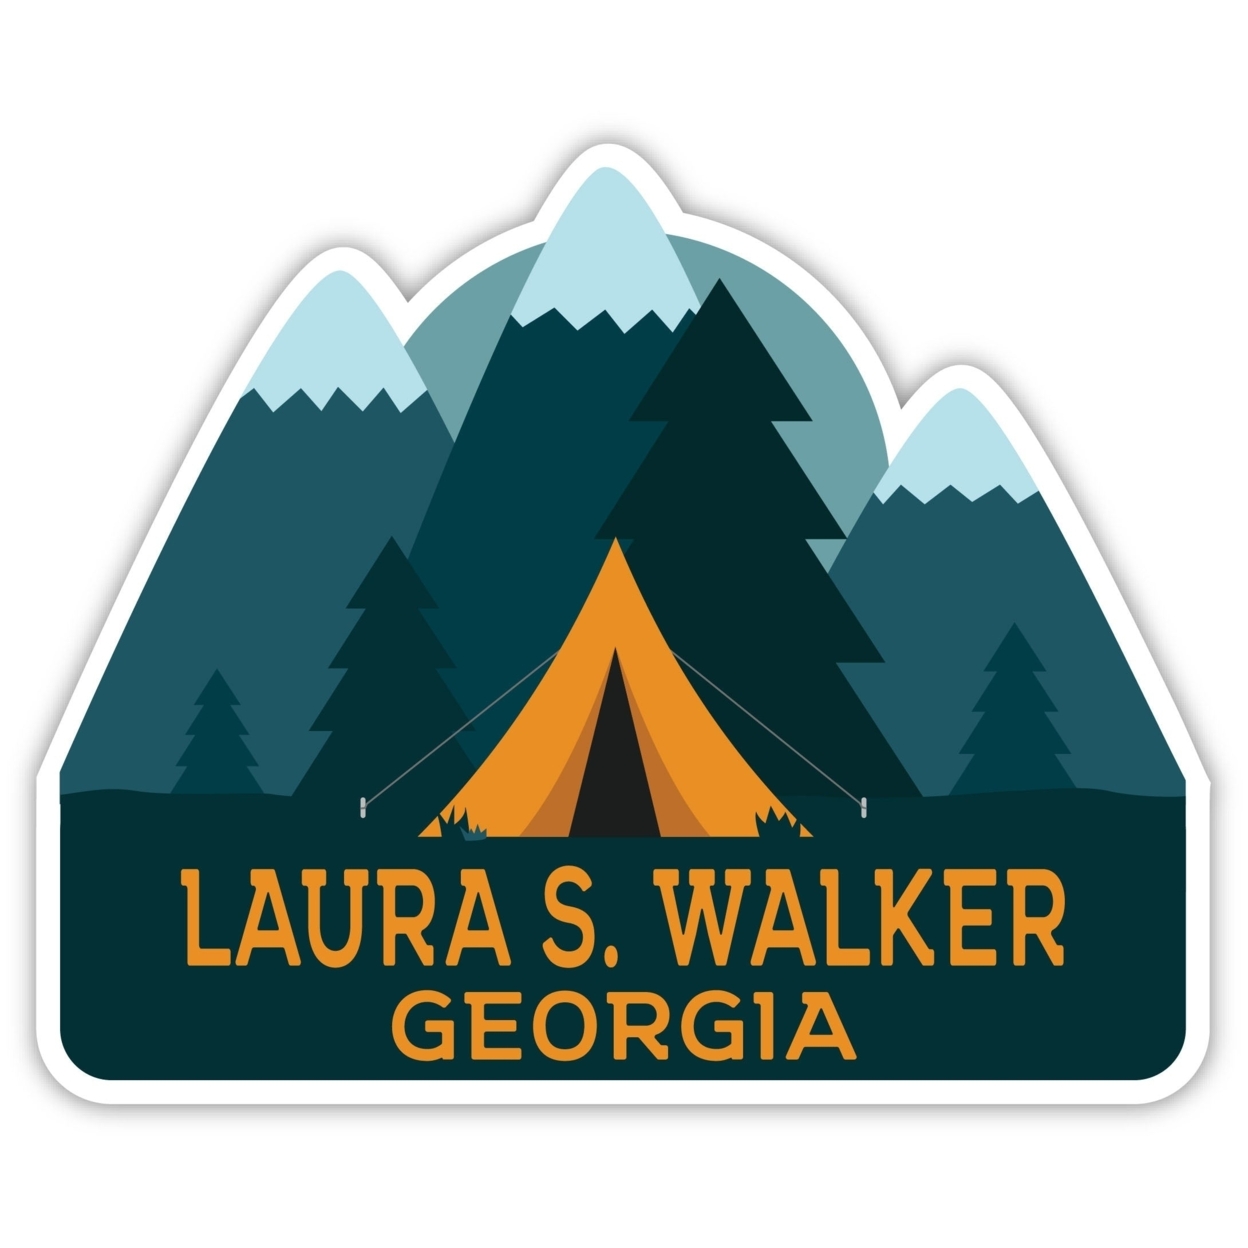 Laura S. Walker Georgia Souvenir Decorative Stickers (Choose Theme And Size) - 4-Inch, Tent